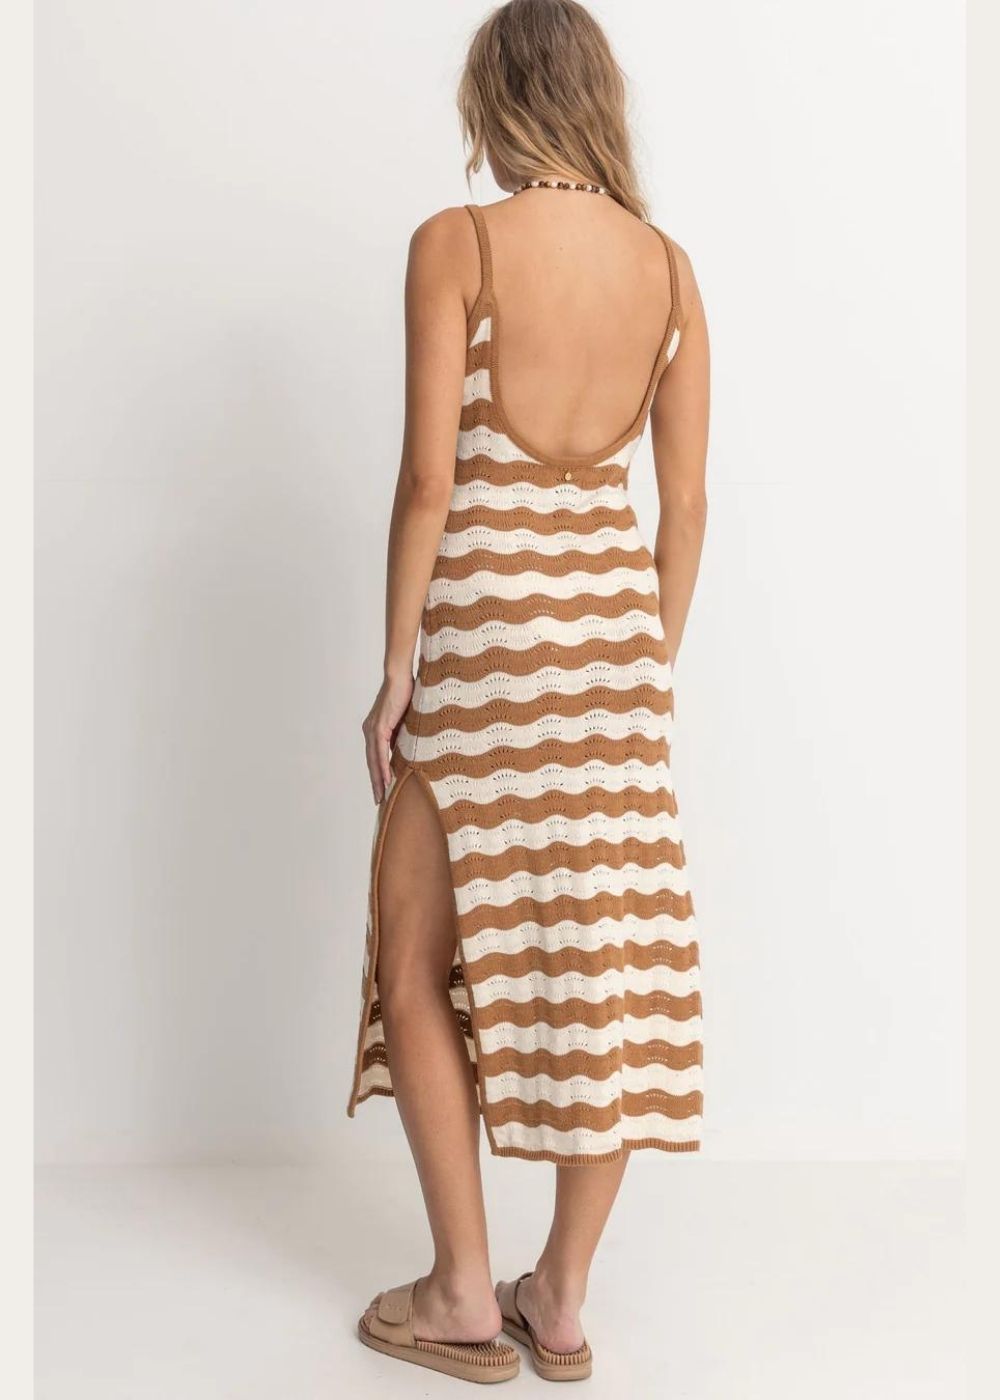 Sunny Knit Midi Dress - שמלת קרושה חום/לבן מידי